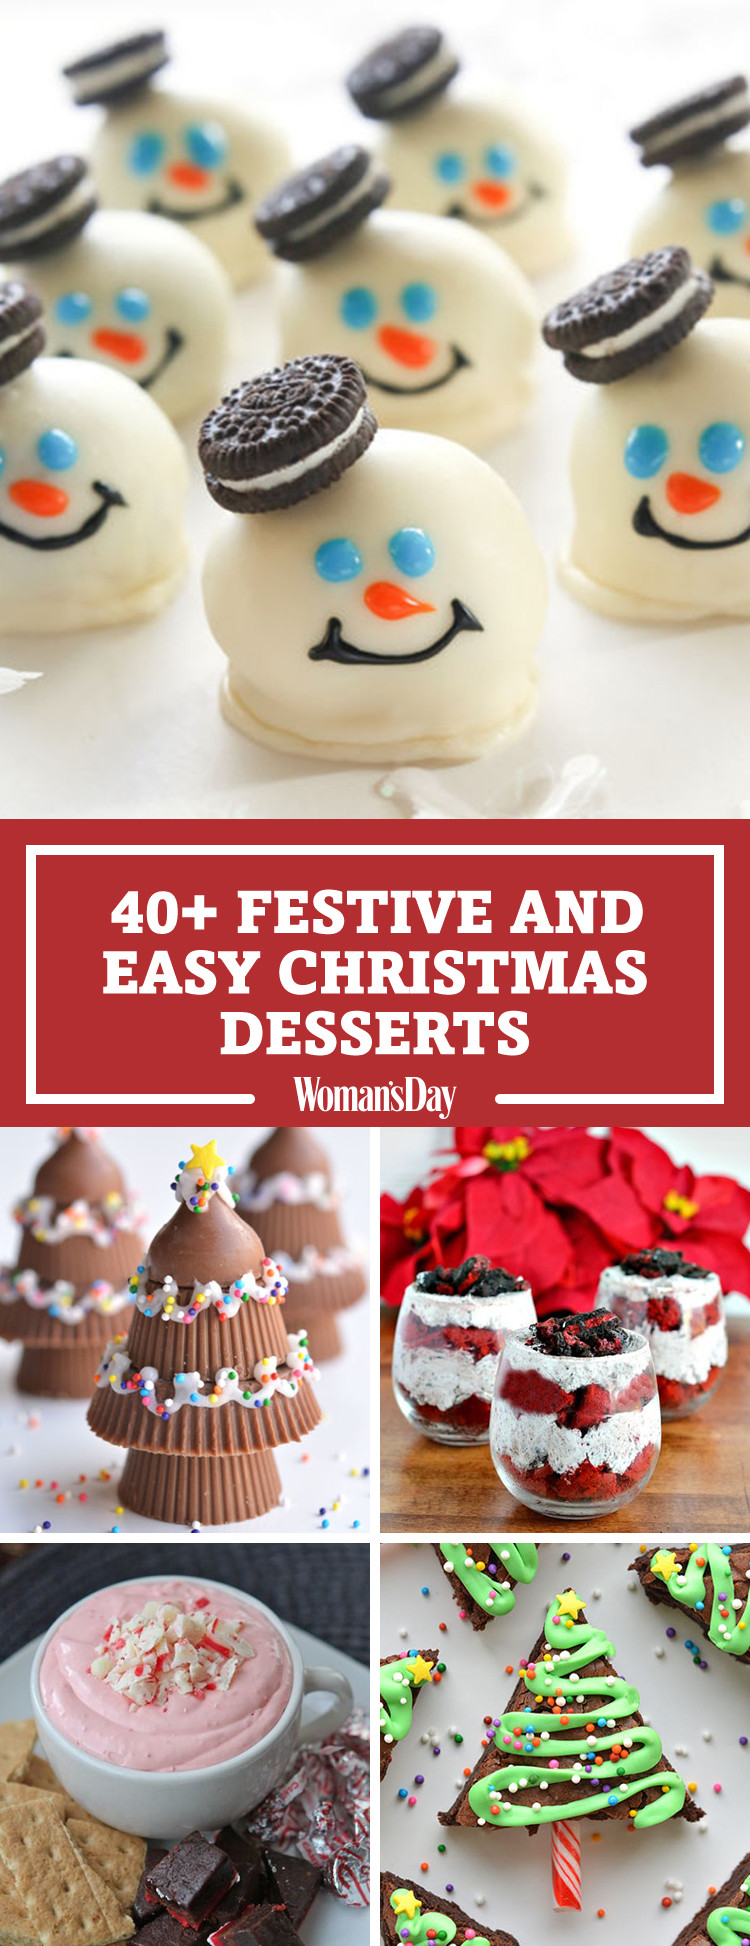 Easy Desserts For Christmas
 57 Easy Christmas Dessert Recipes Best Ideas for Fun